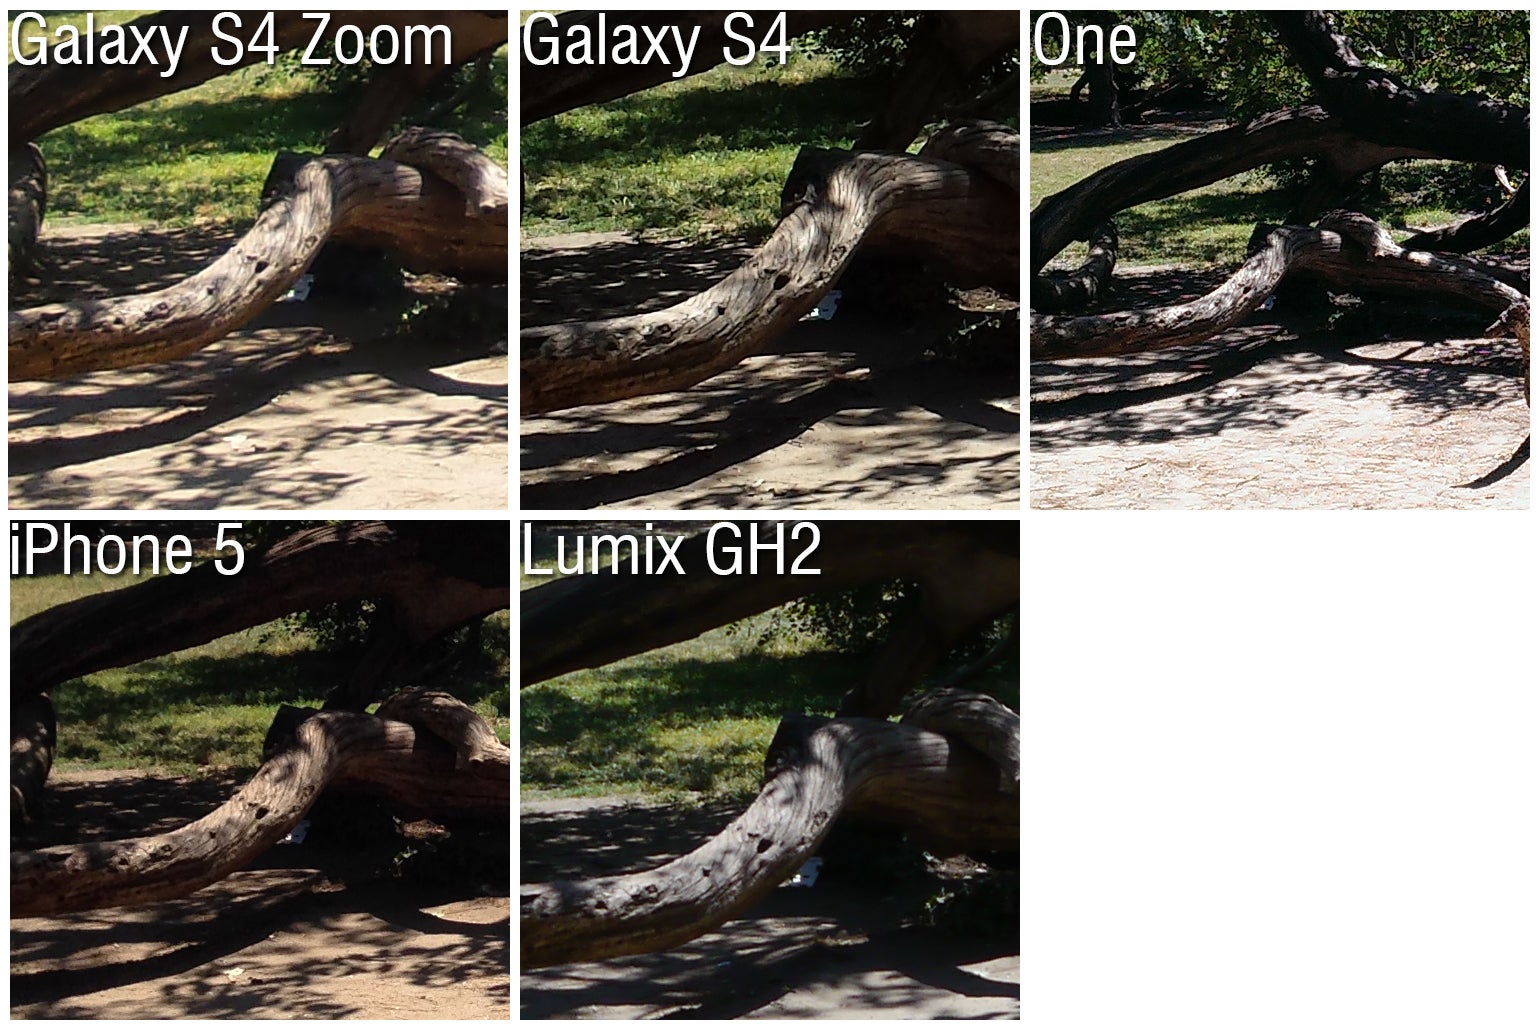 100% crop - Camera Comparison: Samsung Galaxy S4 Zoom vs Galaxy S4, HTC One, iPhone 5